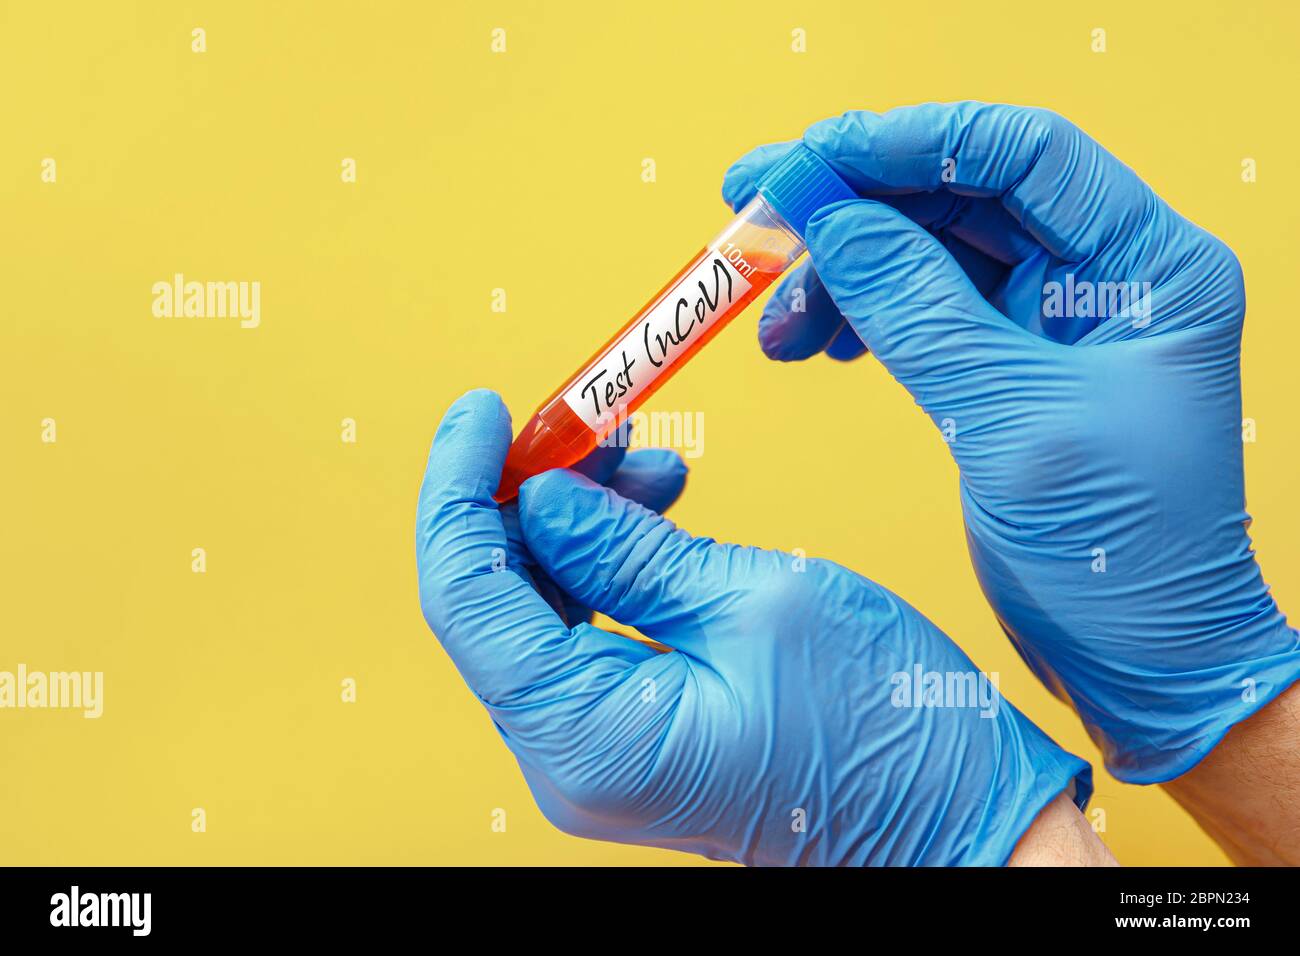 Test tube with blood sample for COVID-19 test, novel coronavirus 2019 Stock Photo